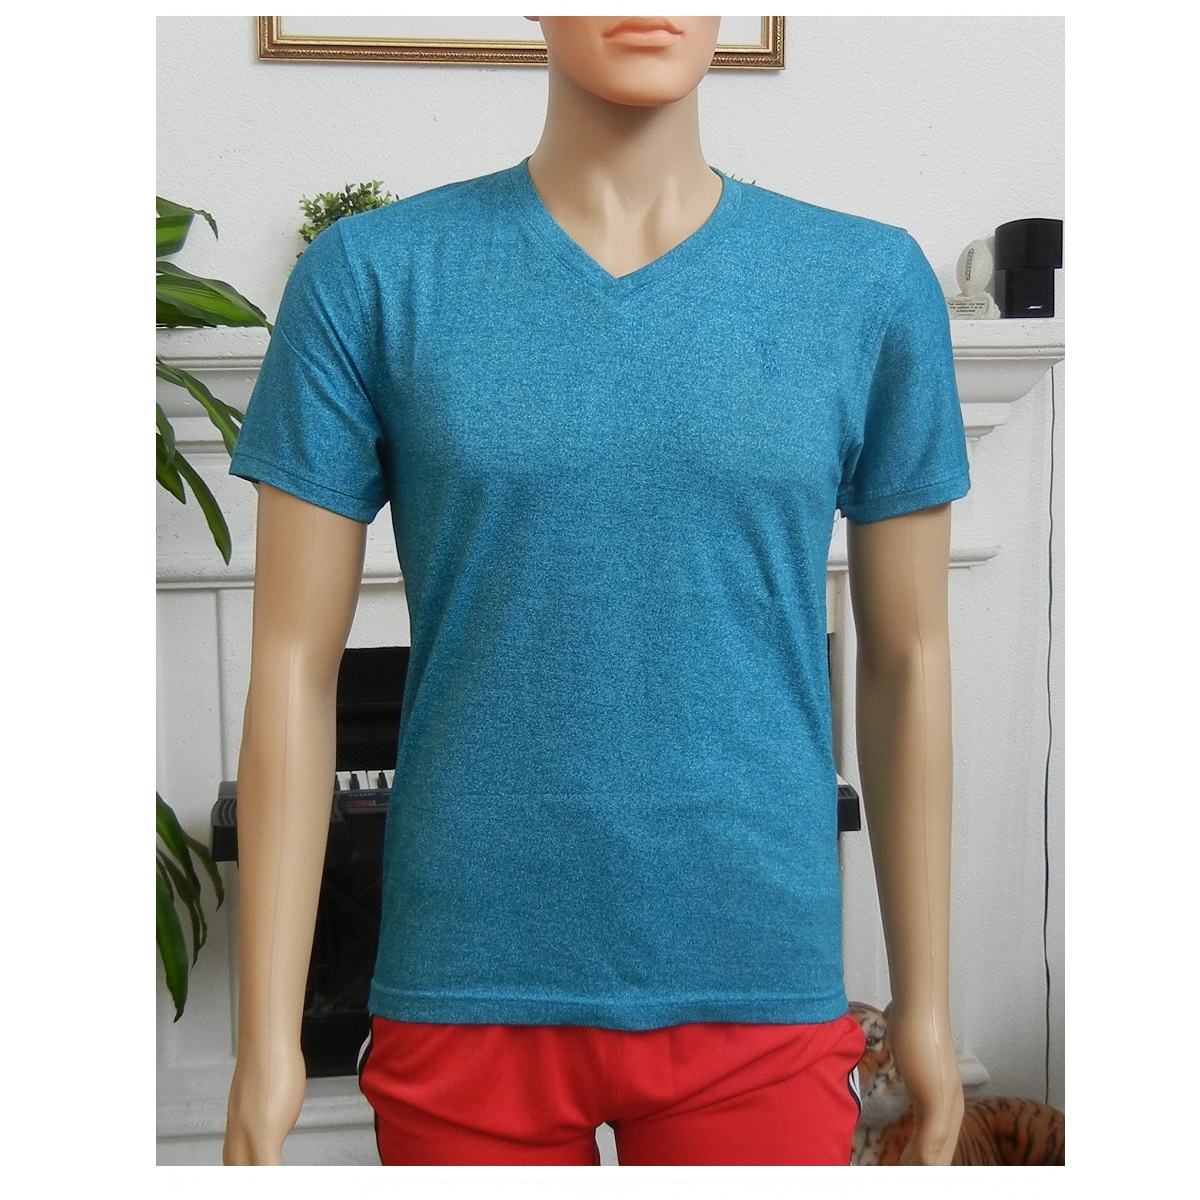 Men's T-Shirt, Short Sleeve V-Neck Cotton T-Shirt Basic Plain T-Shirt for men, Heather blue